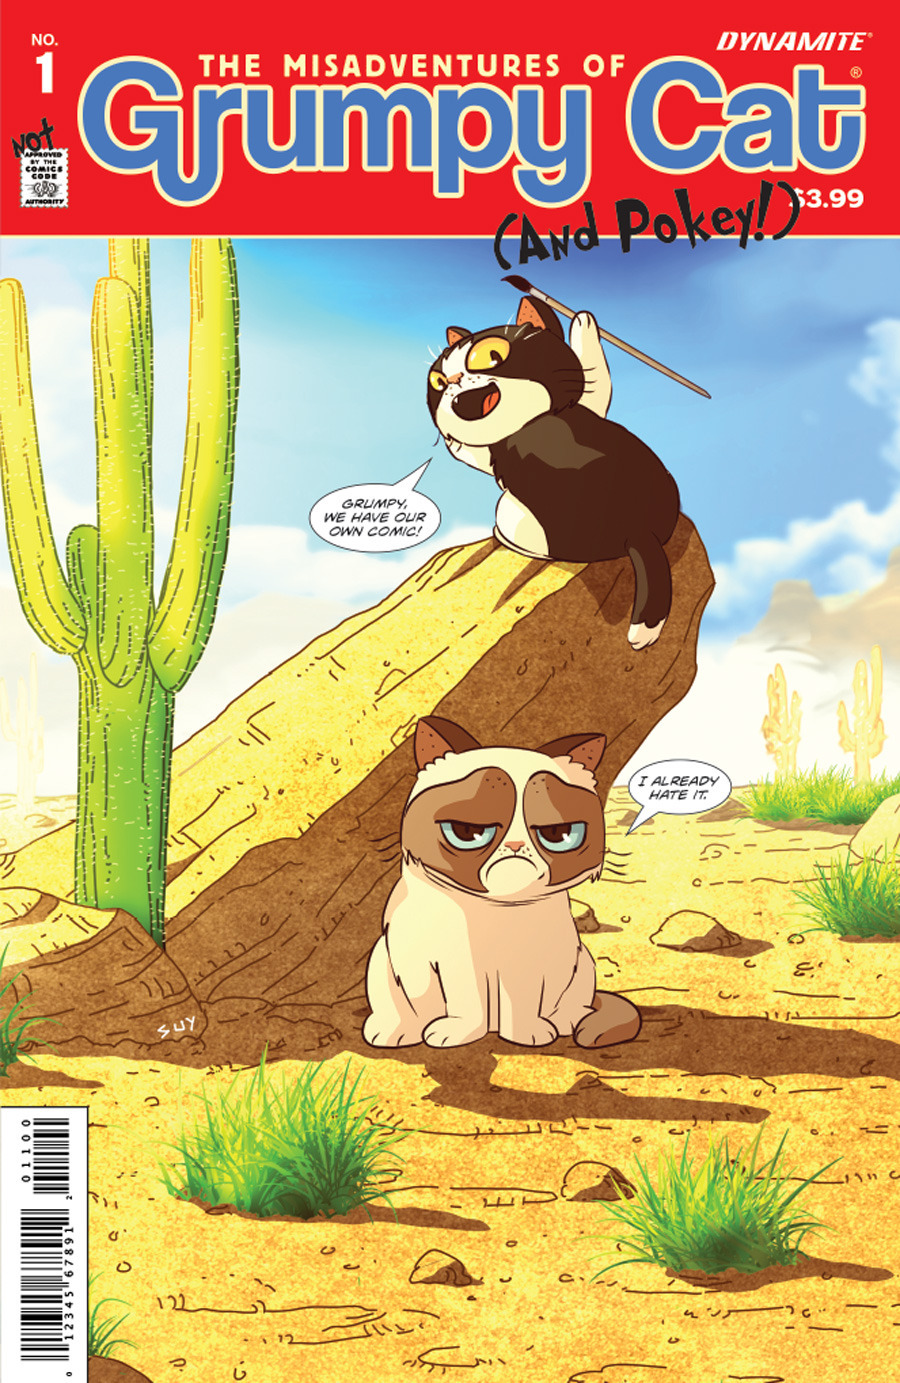 Grumpy Cat comic book series accounced